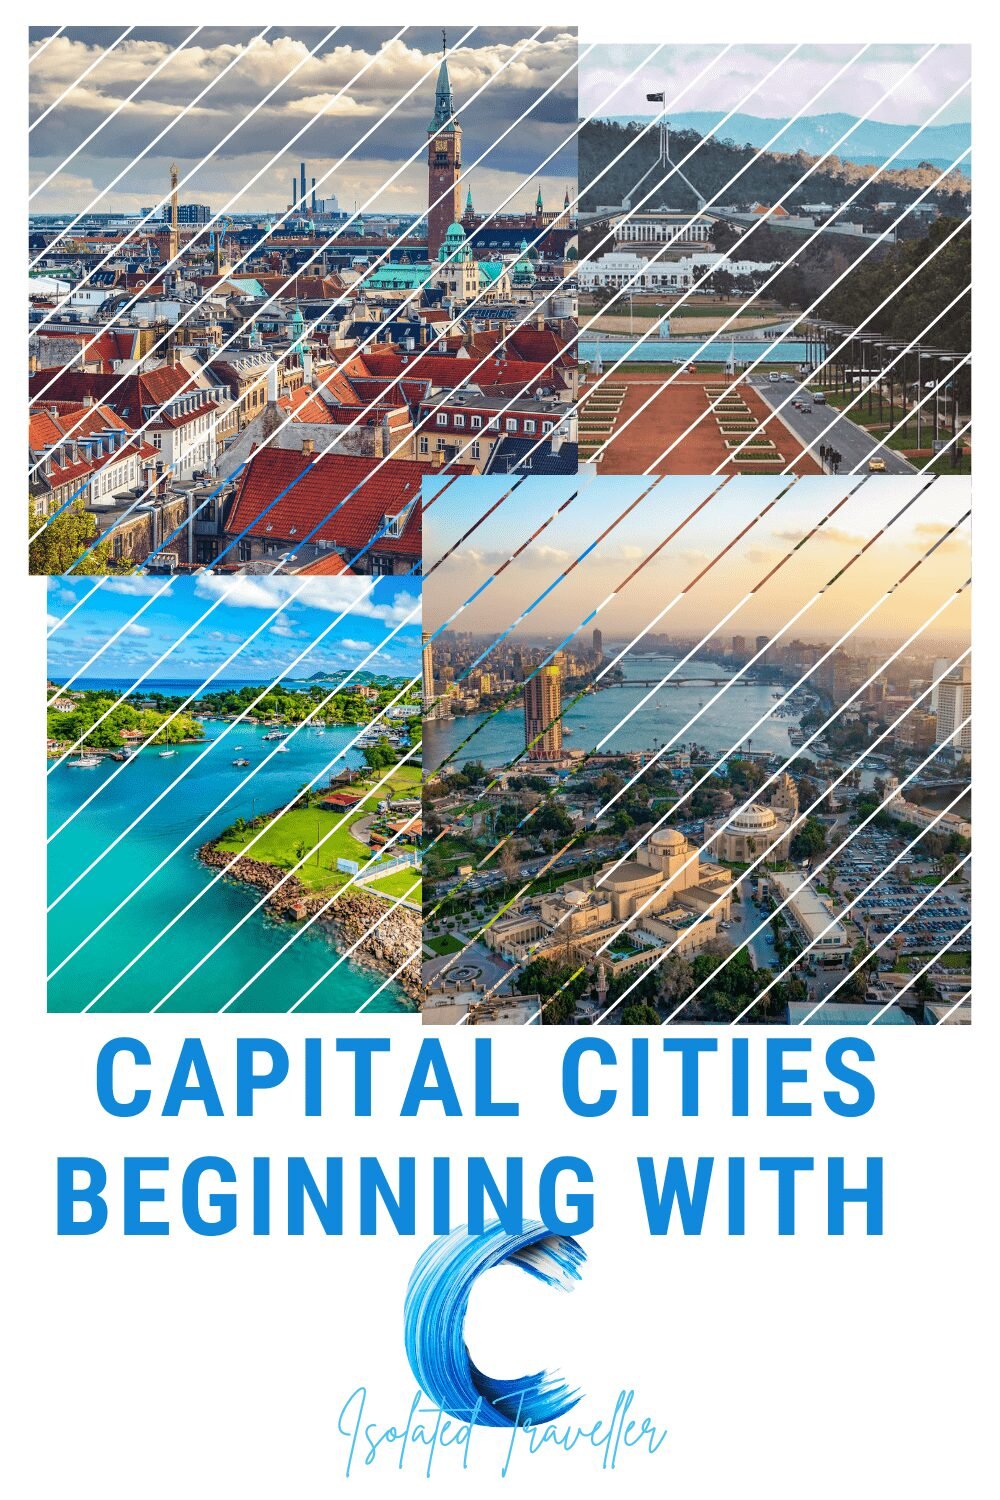 Cities beginning with C